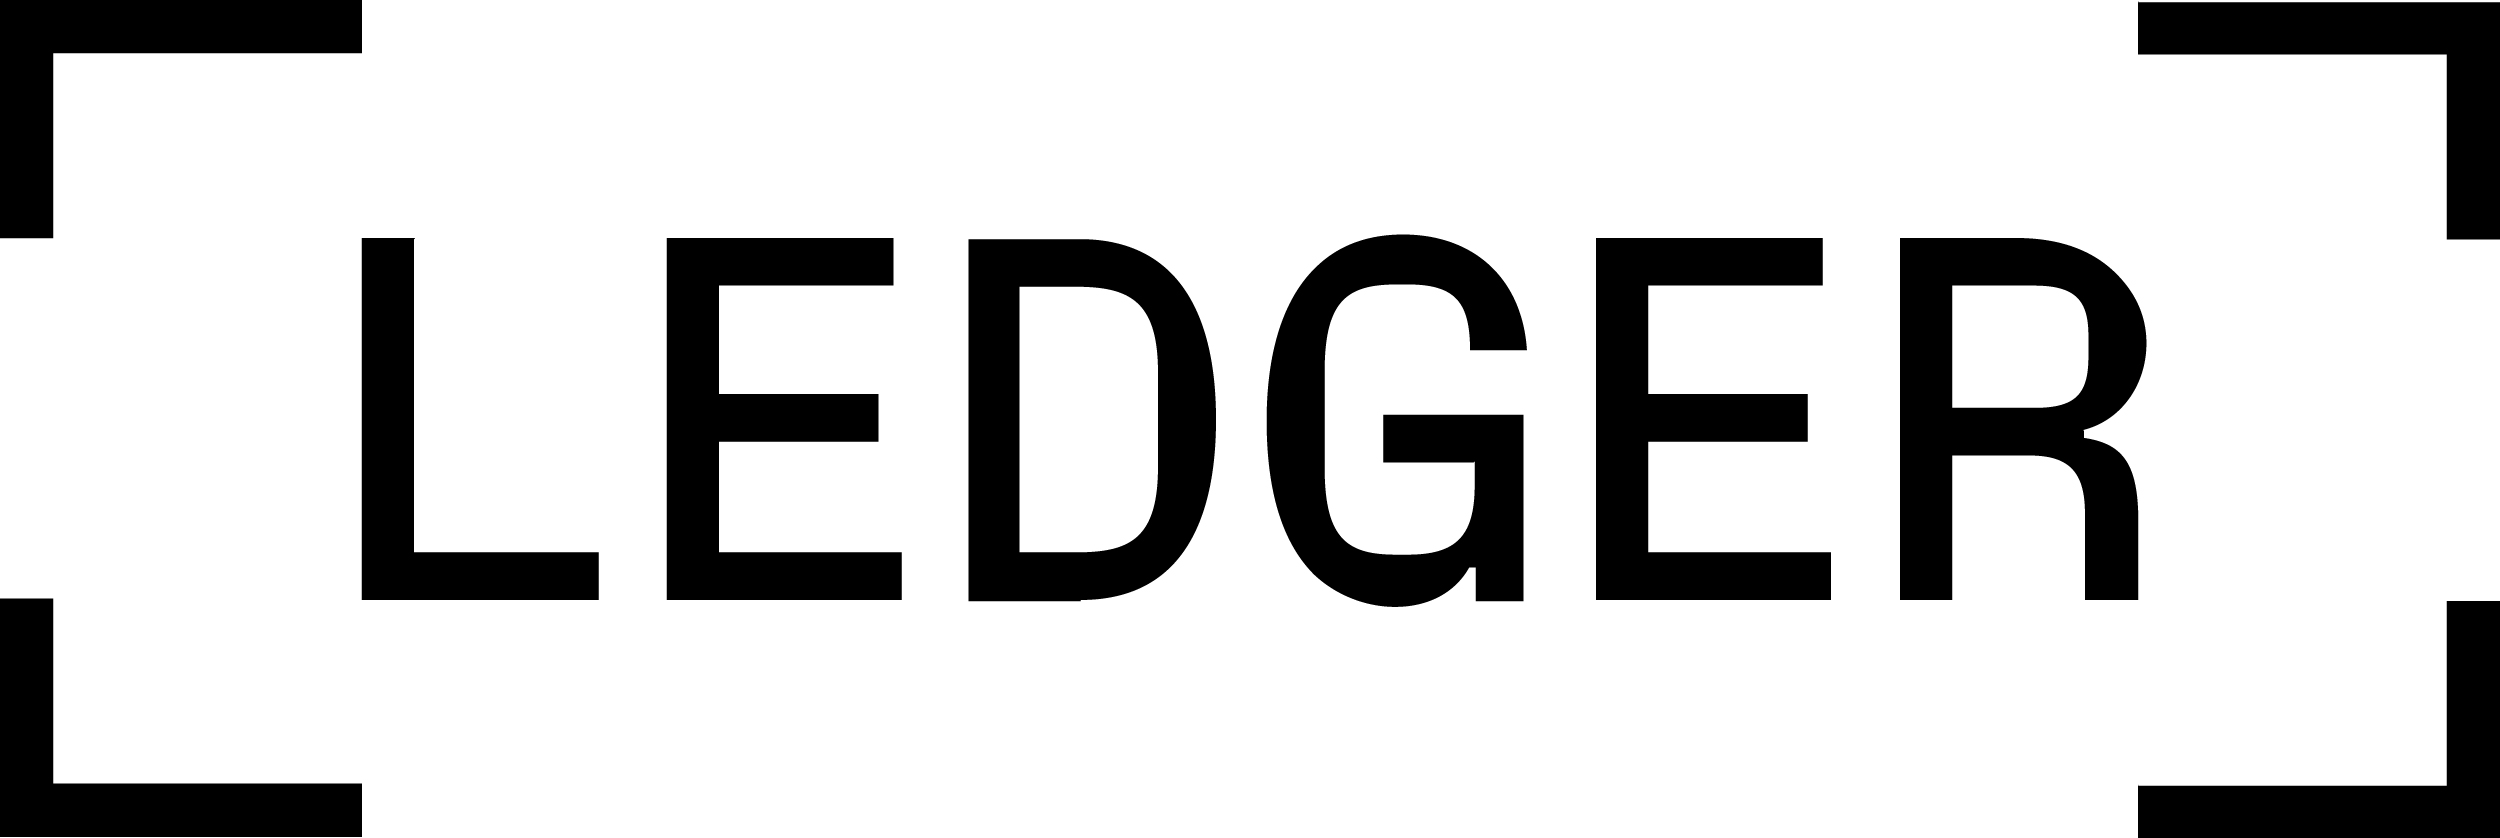 ledger logo promo discount